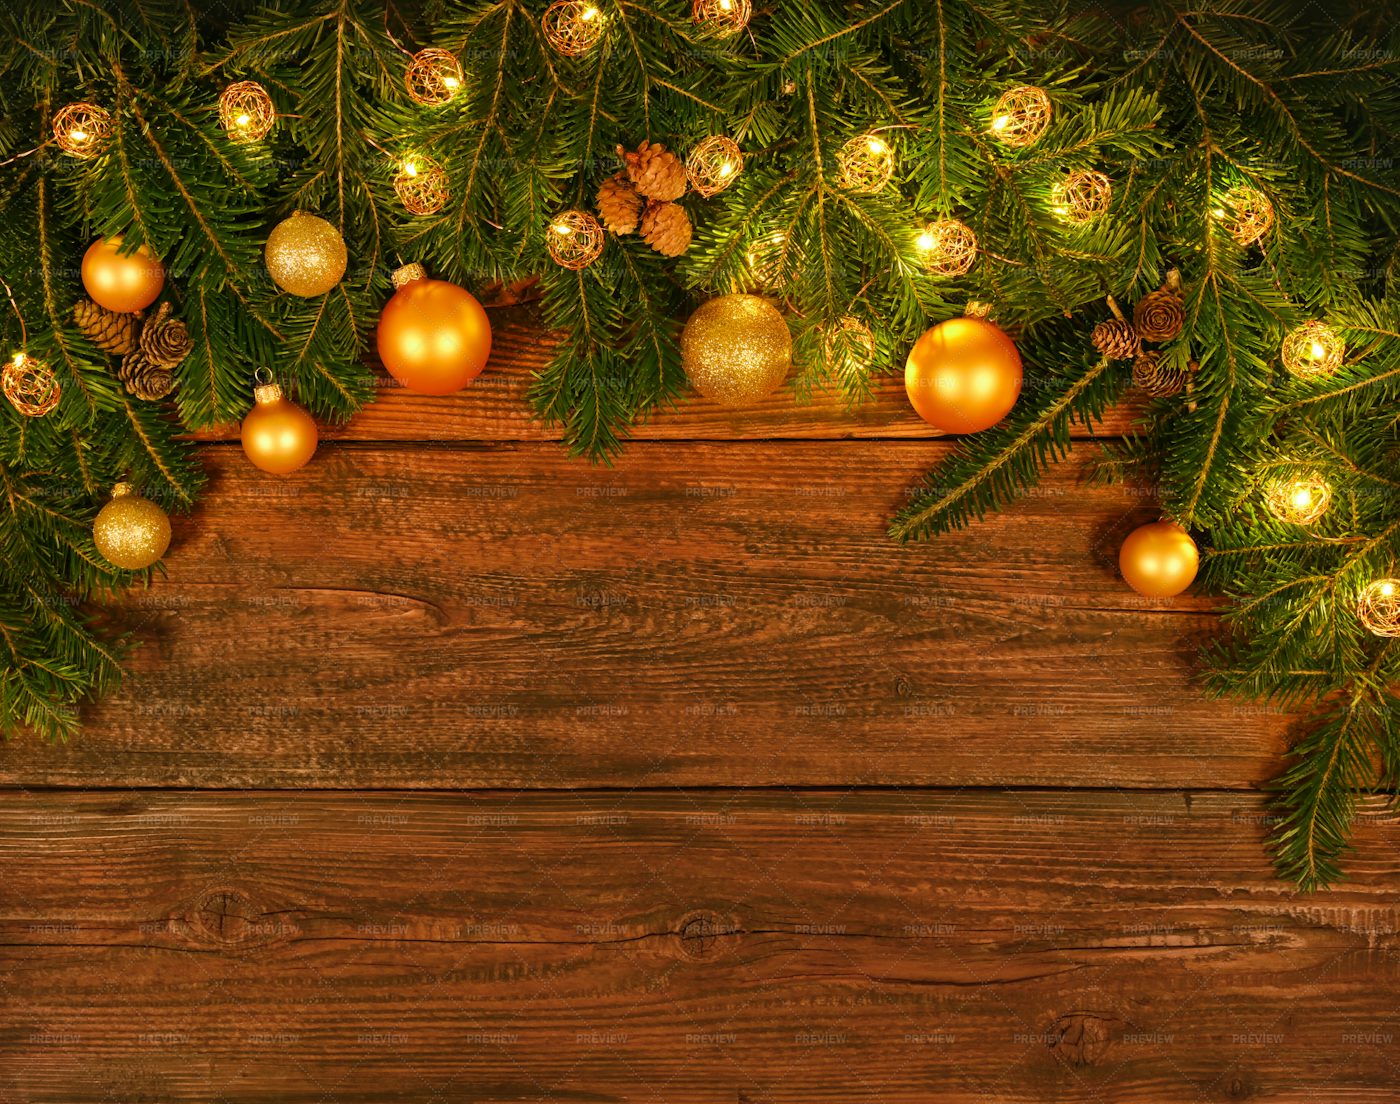 Christmas Tree With Lights: Stock Photos